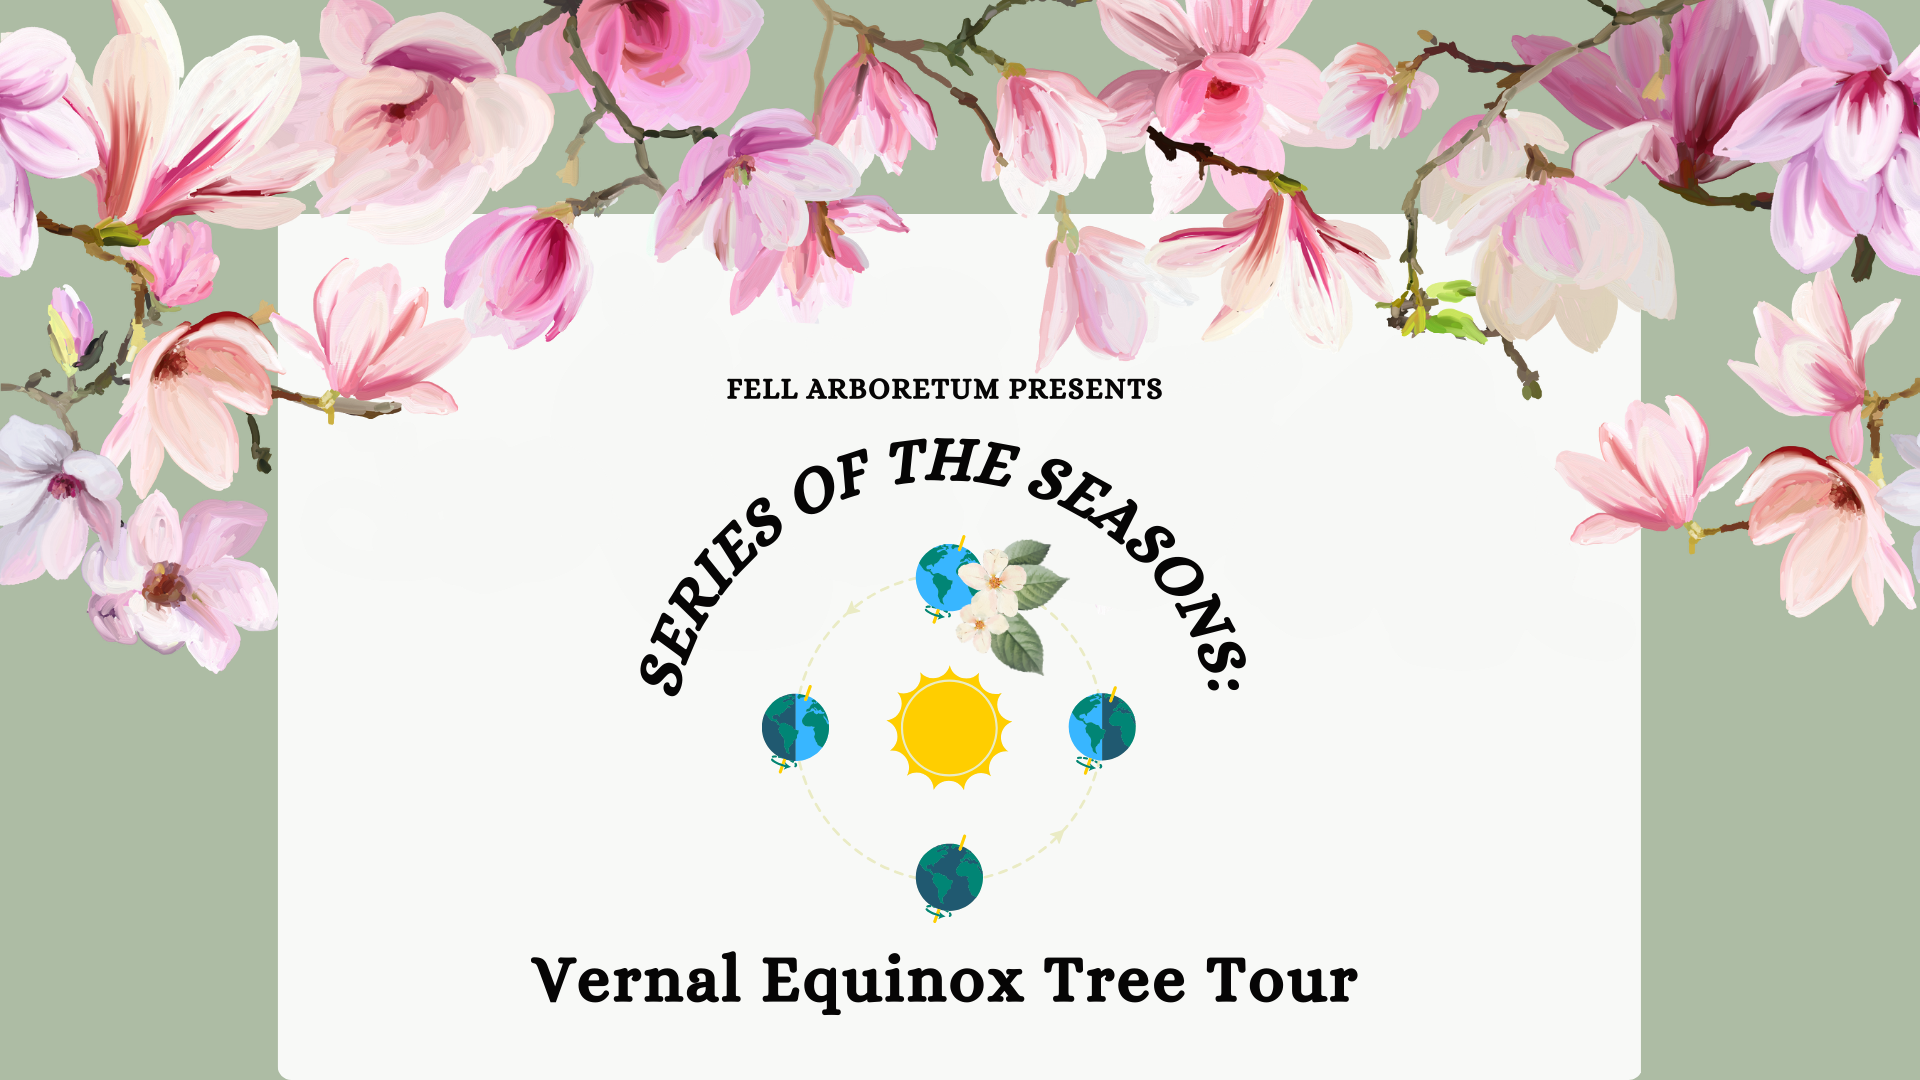 Vernal Equinox Tree Tour in the Fell Arboretum